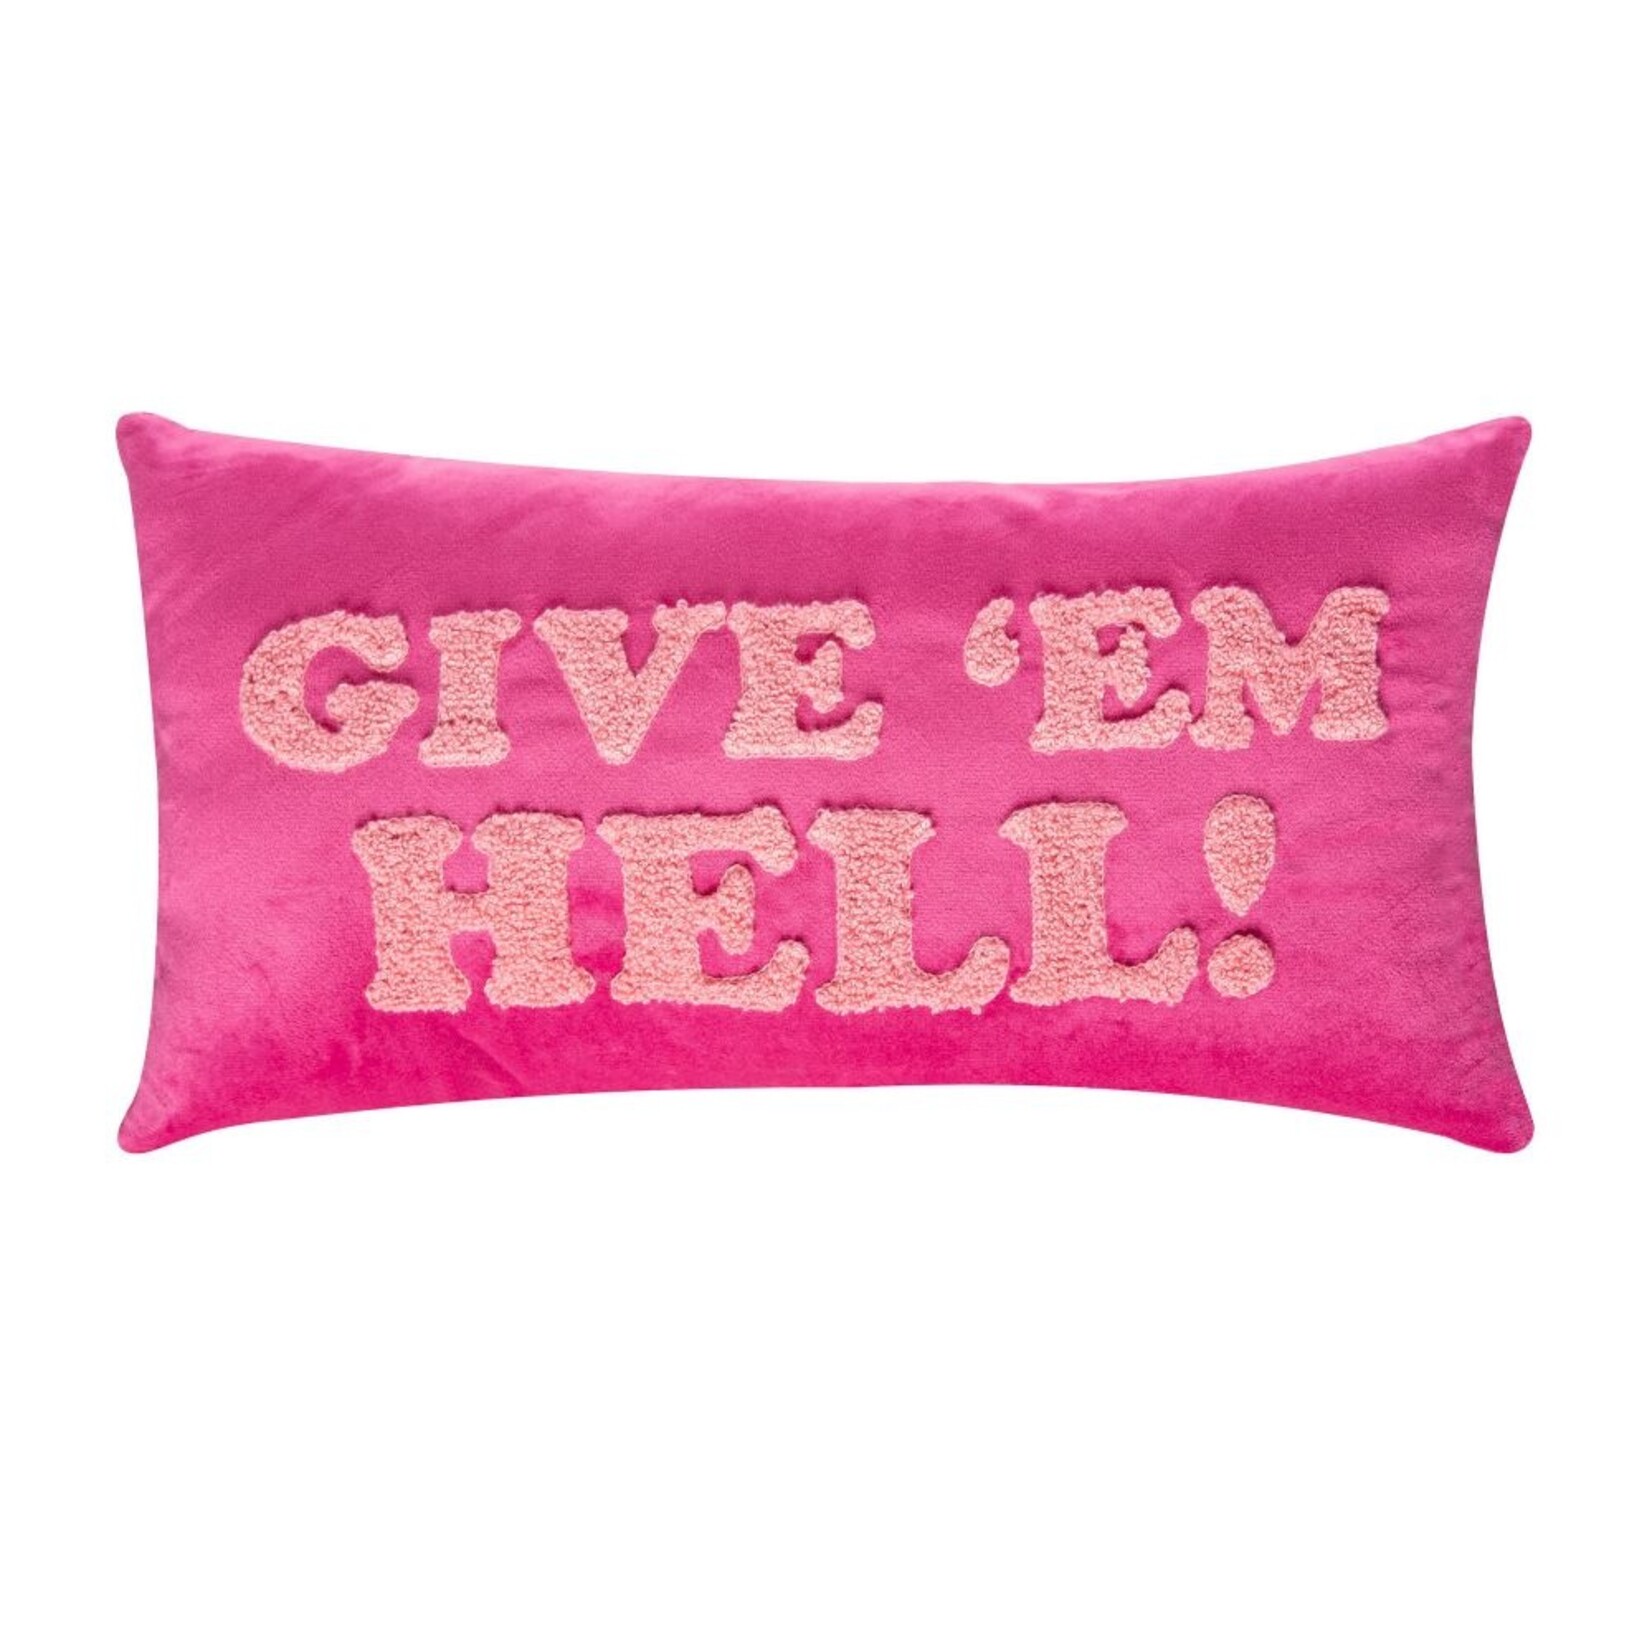 Give Em Hell Towel Loop Lumbar Pillow